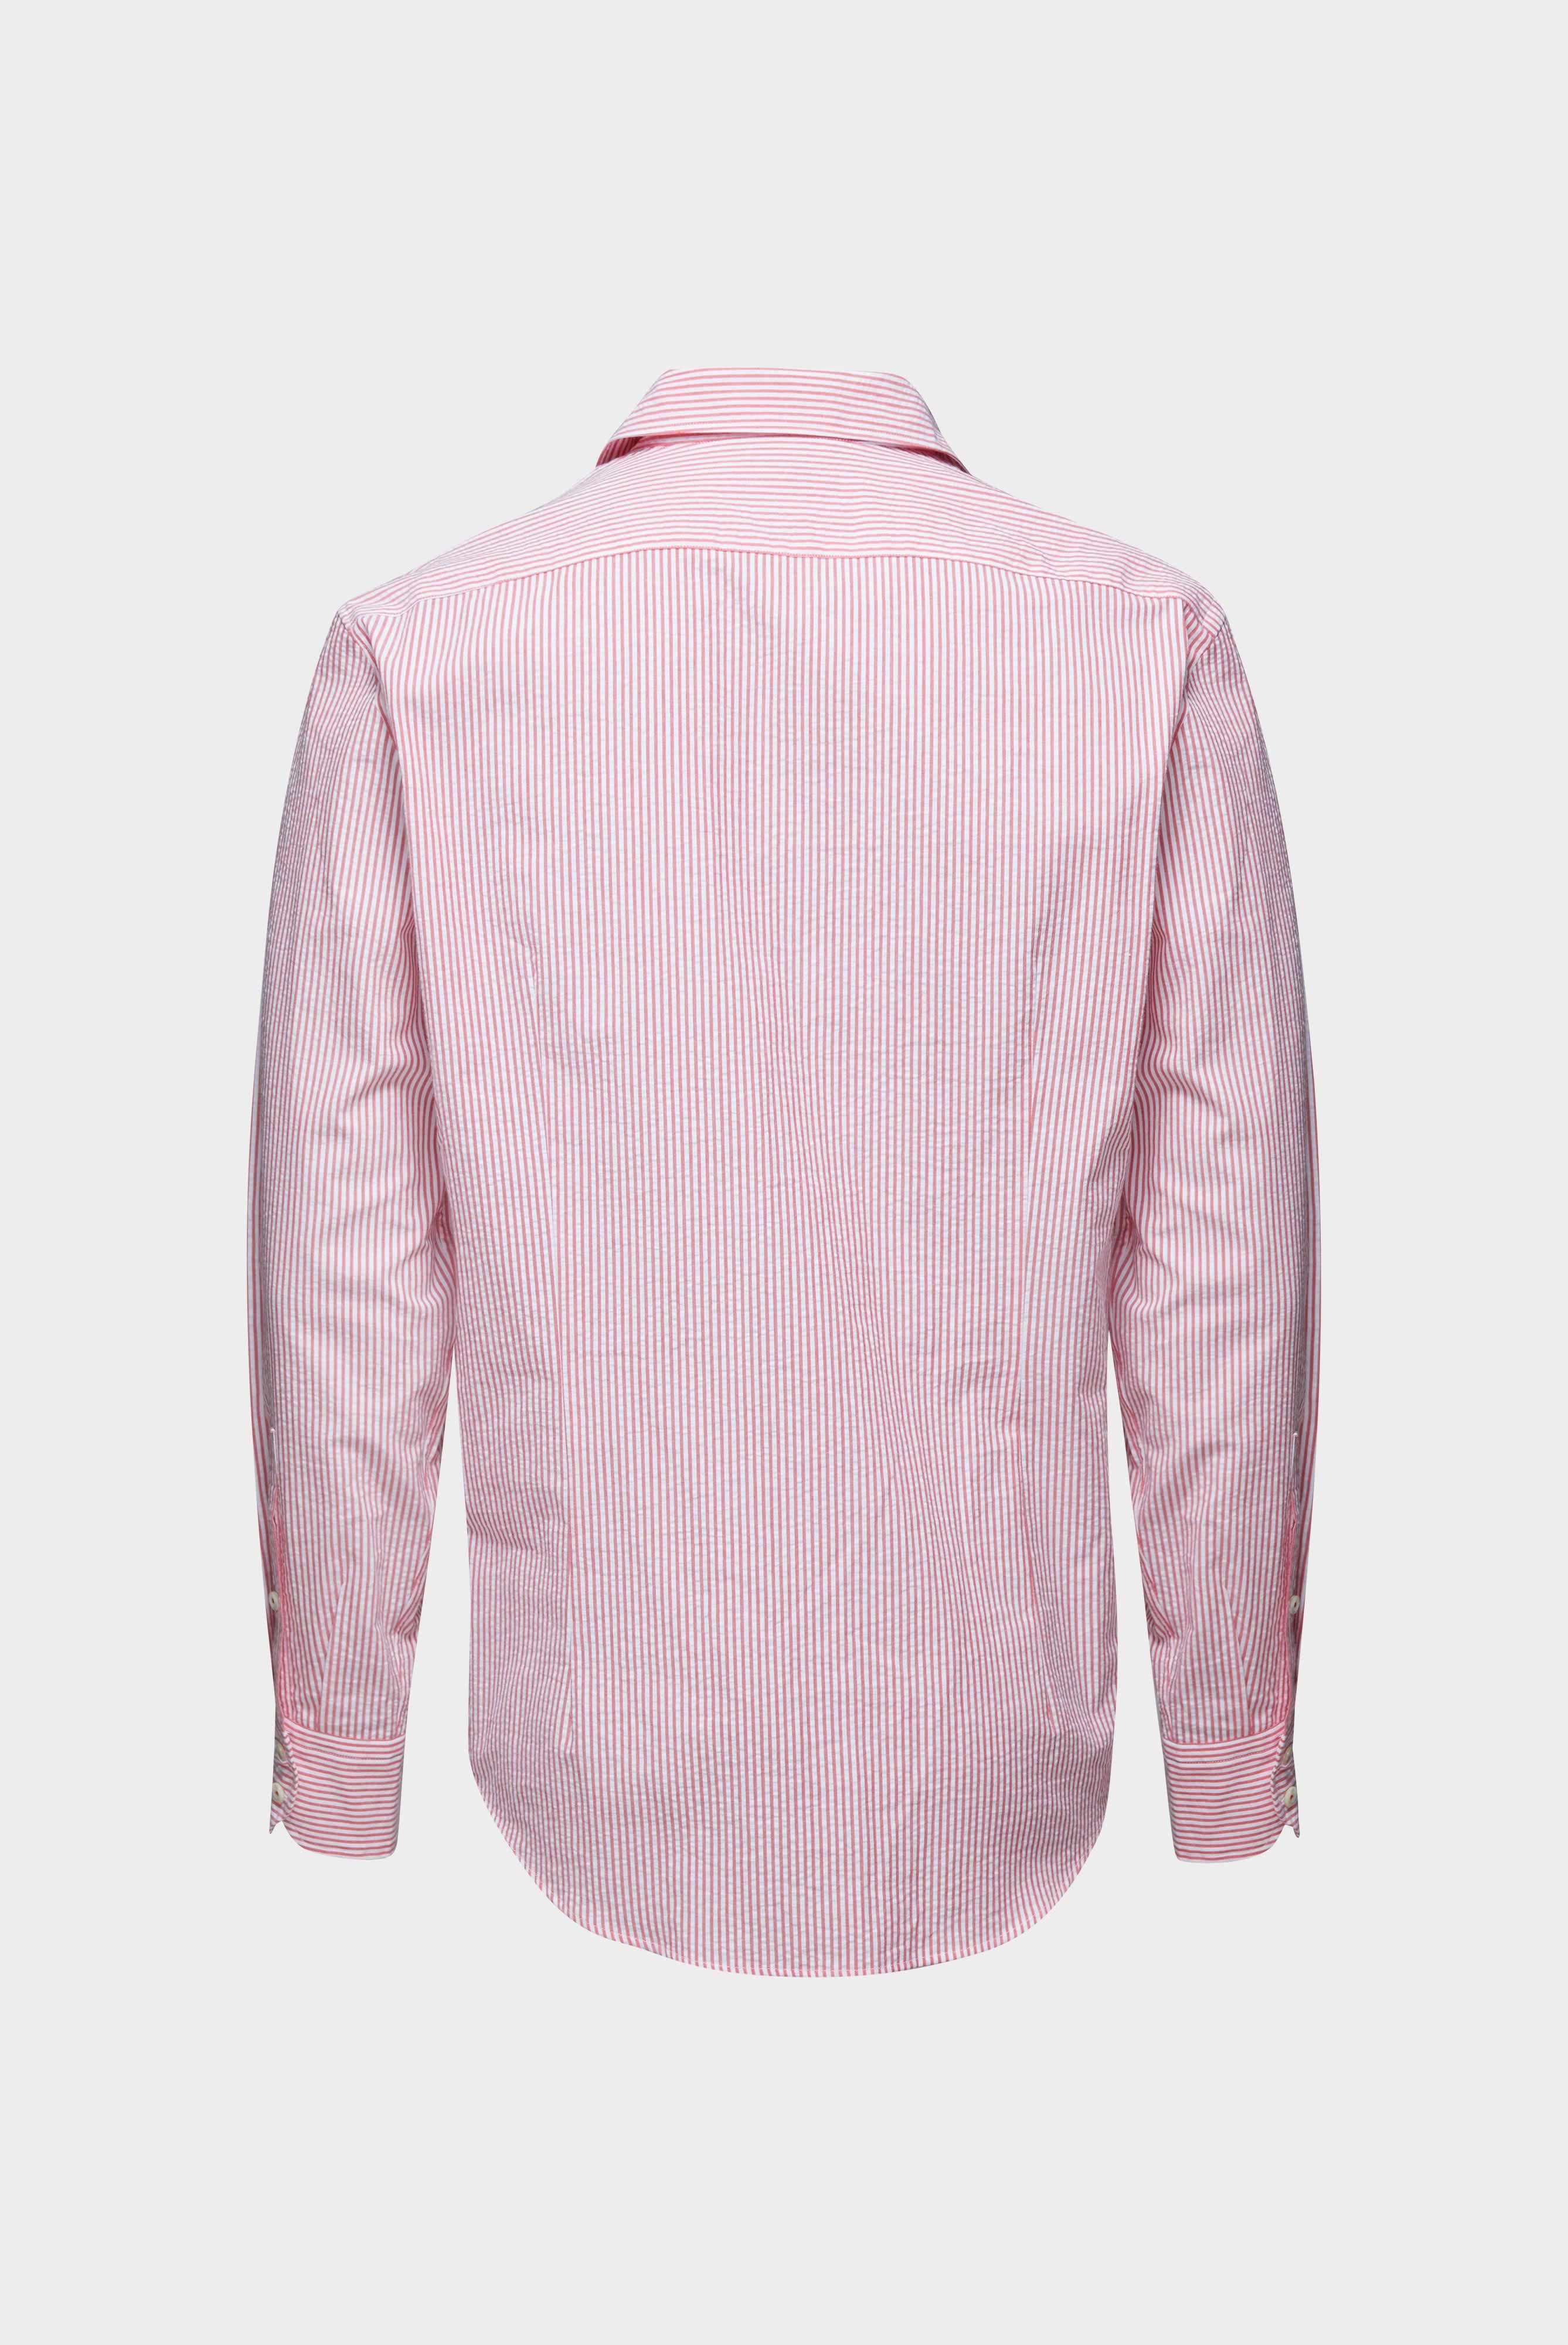 Casual Shirts+Striped Cotton Seersucker Shirt Tailor Fit+20.2011.AV.151054.550.40